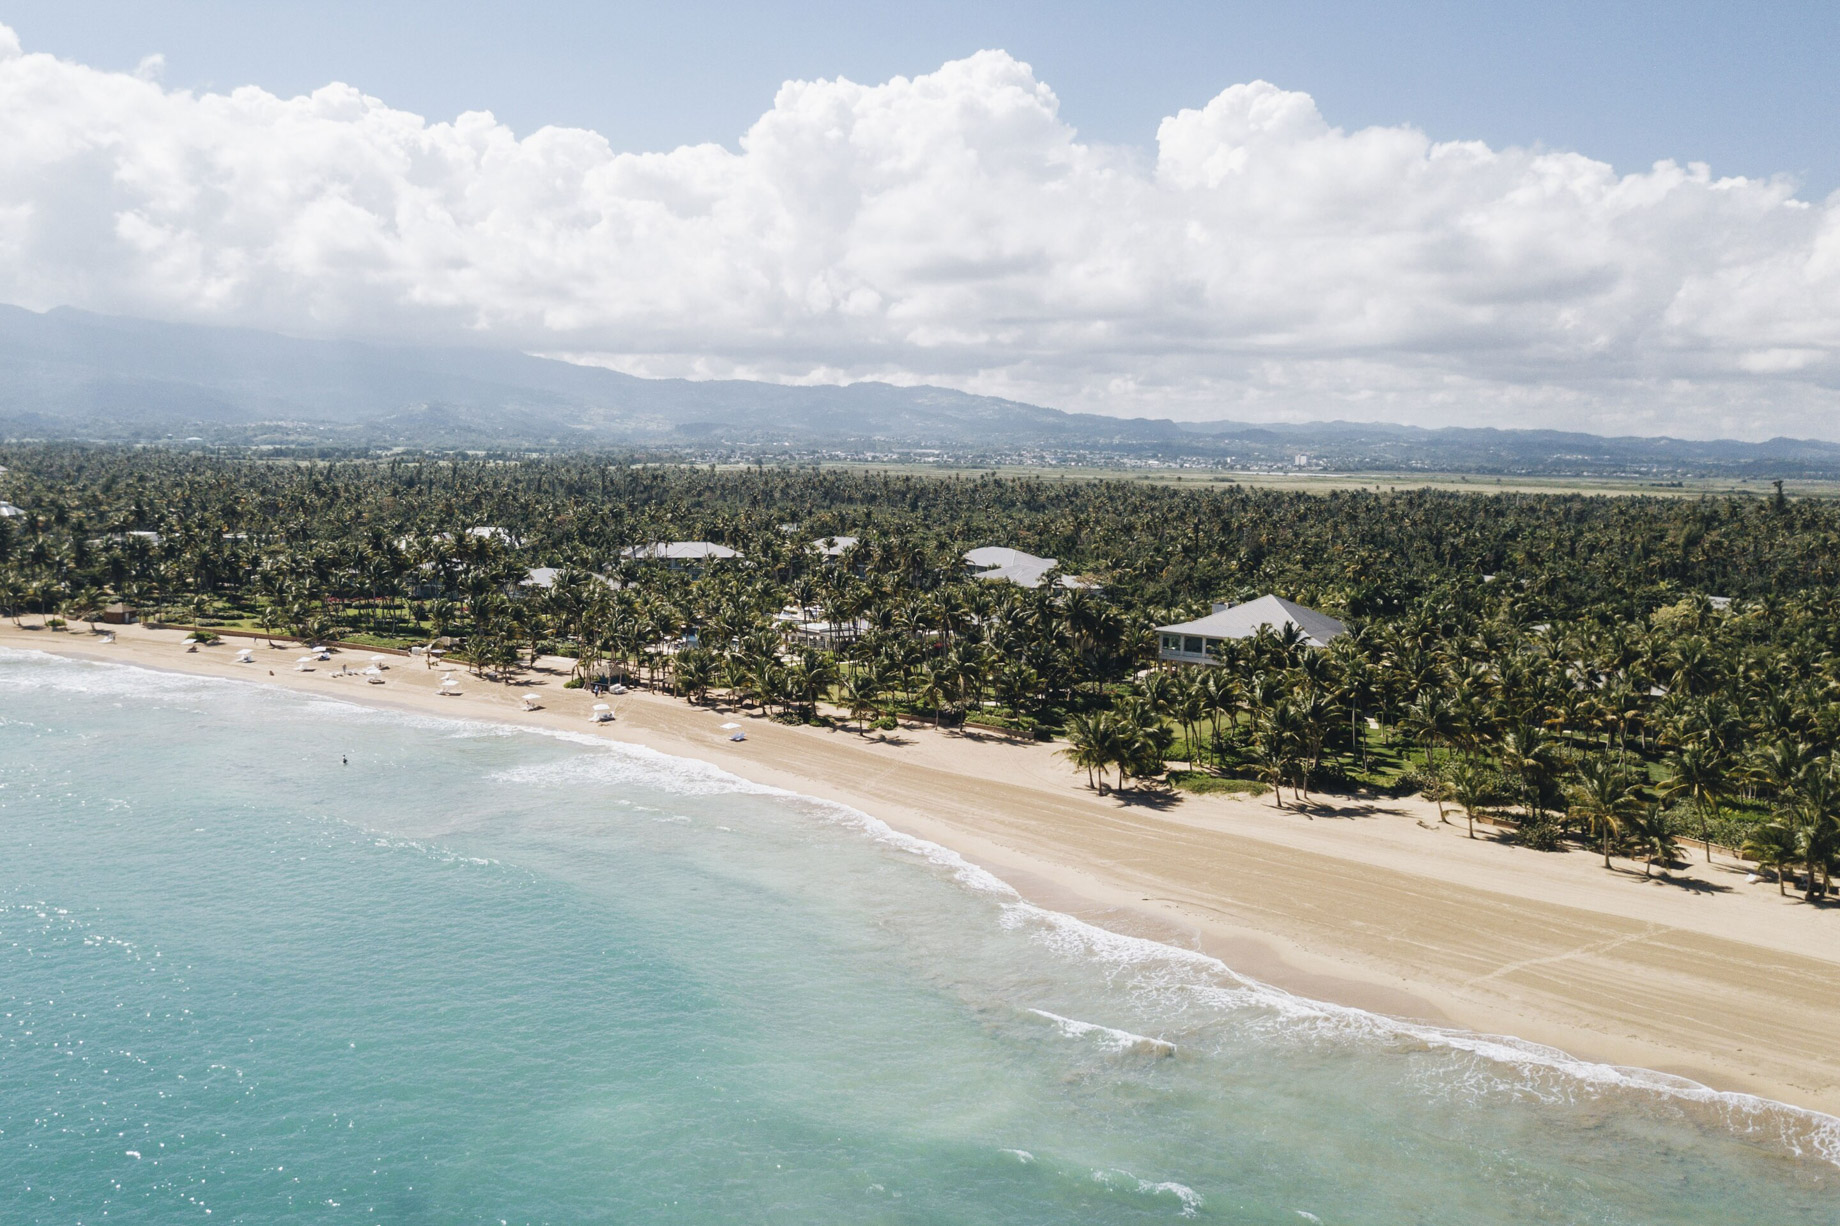 The St. Regis Bahia Beach Resort – Rio Grande, Puerto Rico – Beach Landscape View